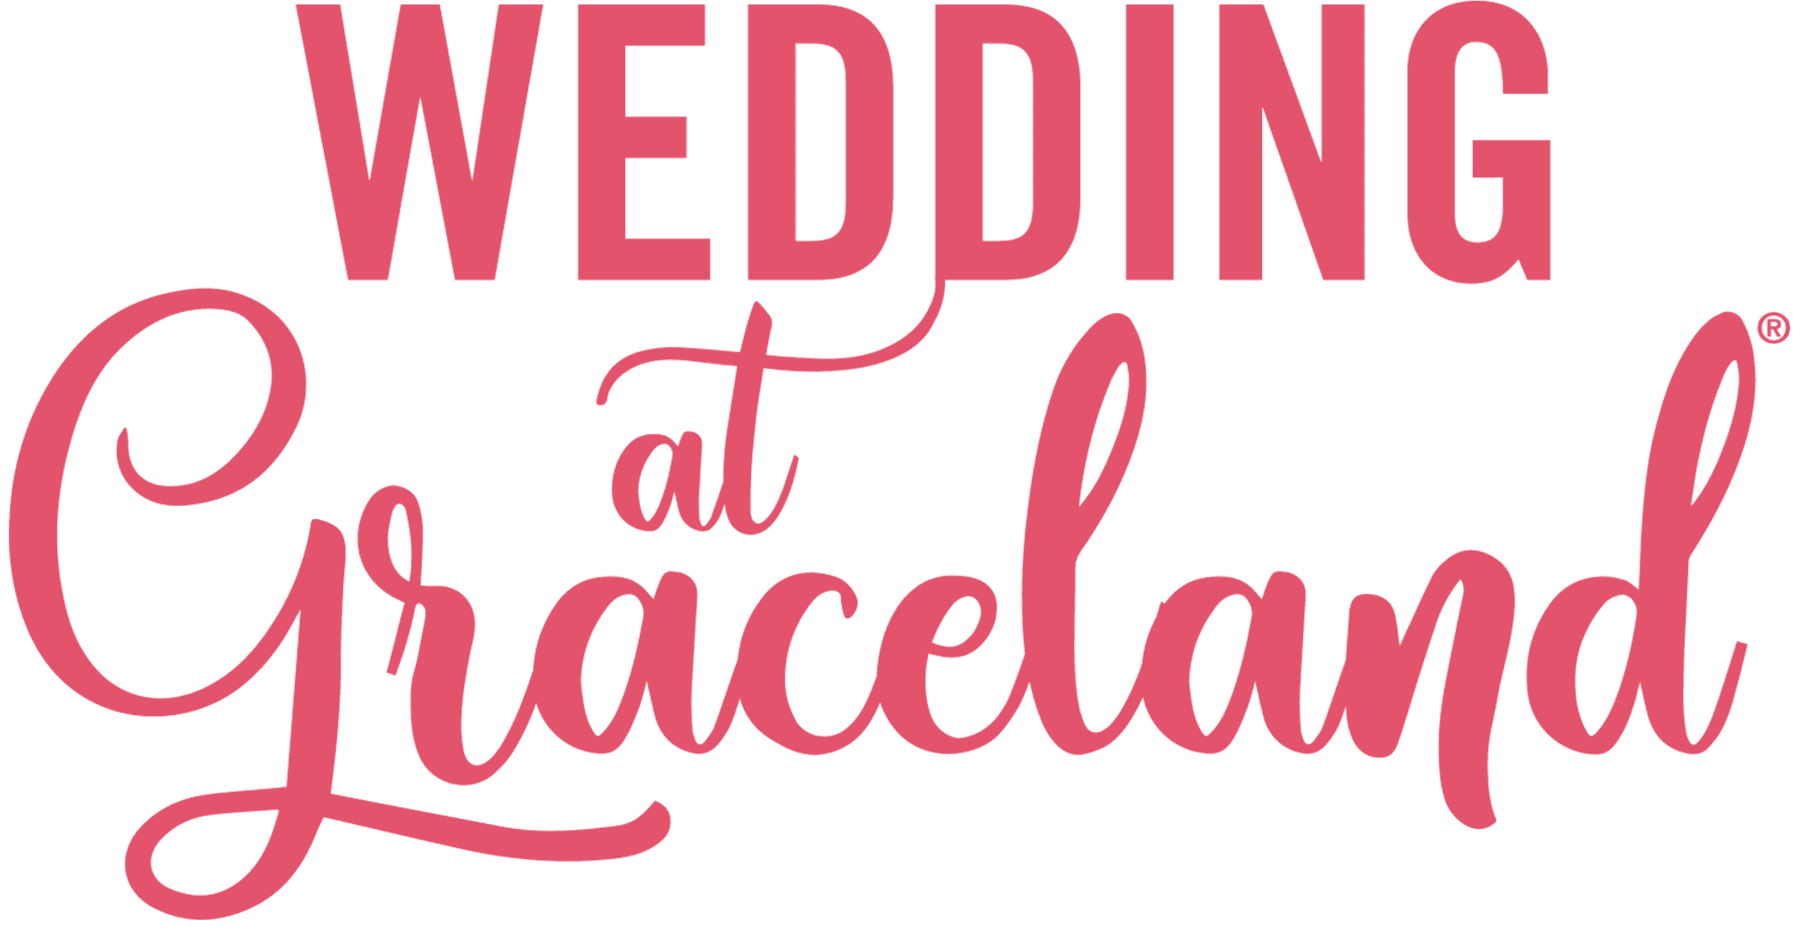 Wedding at Graceland logo